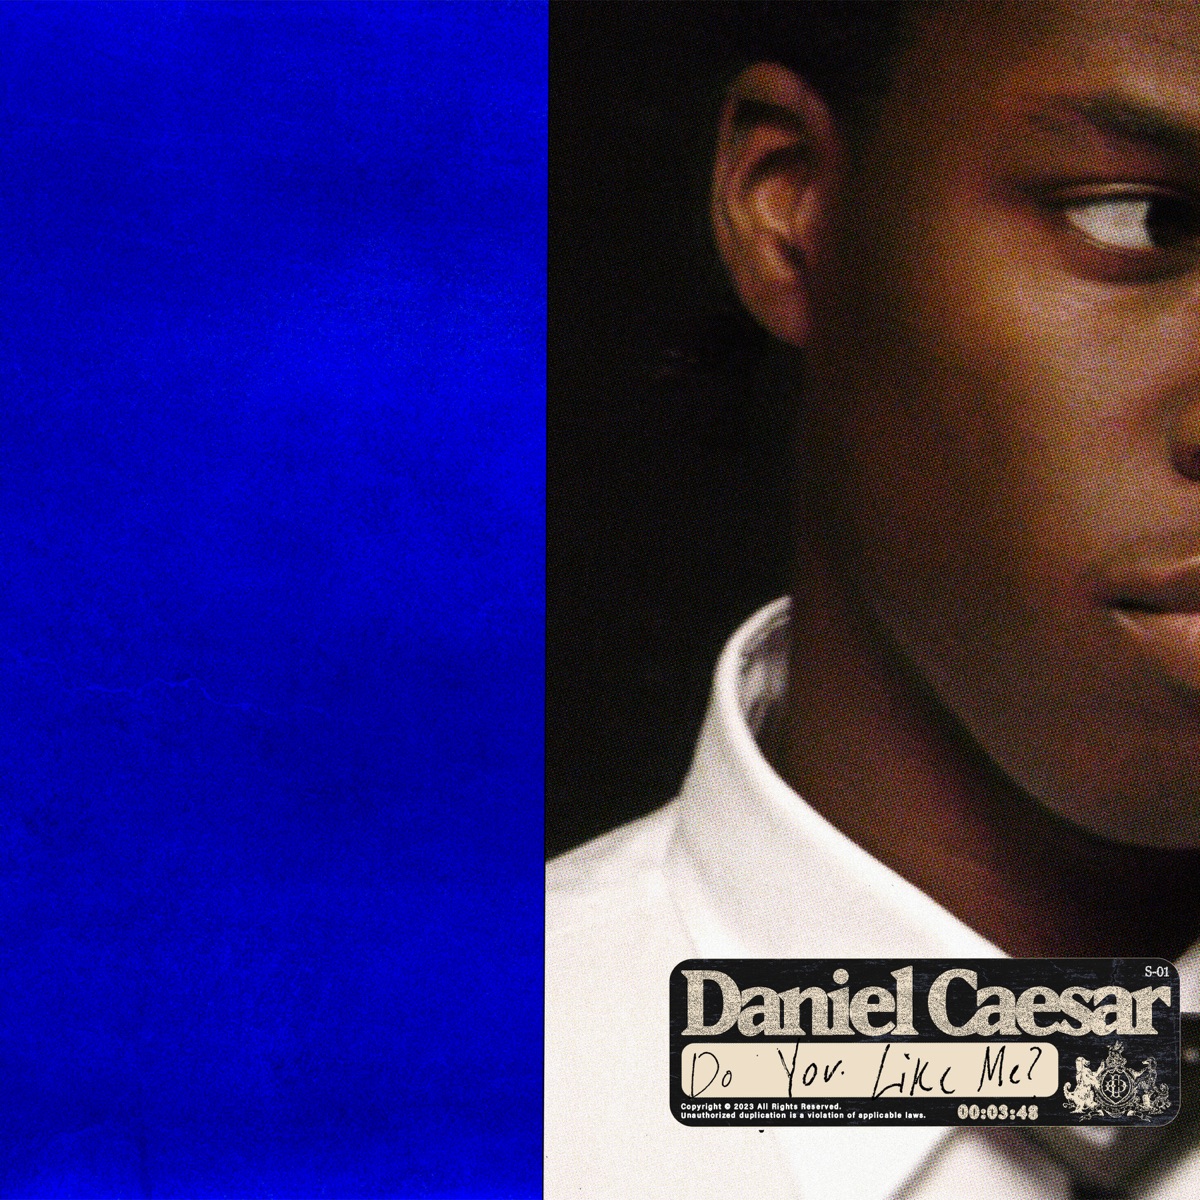 Daniel Caesar - CASE STUDY 01 Lyrics and Tracklist